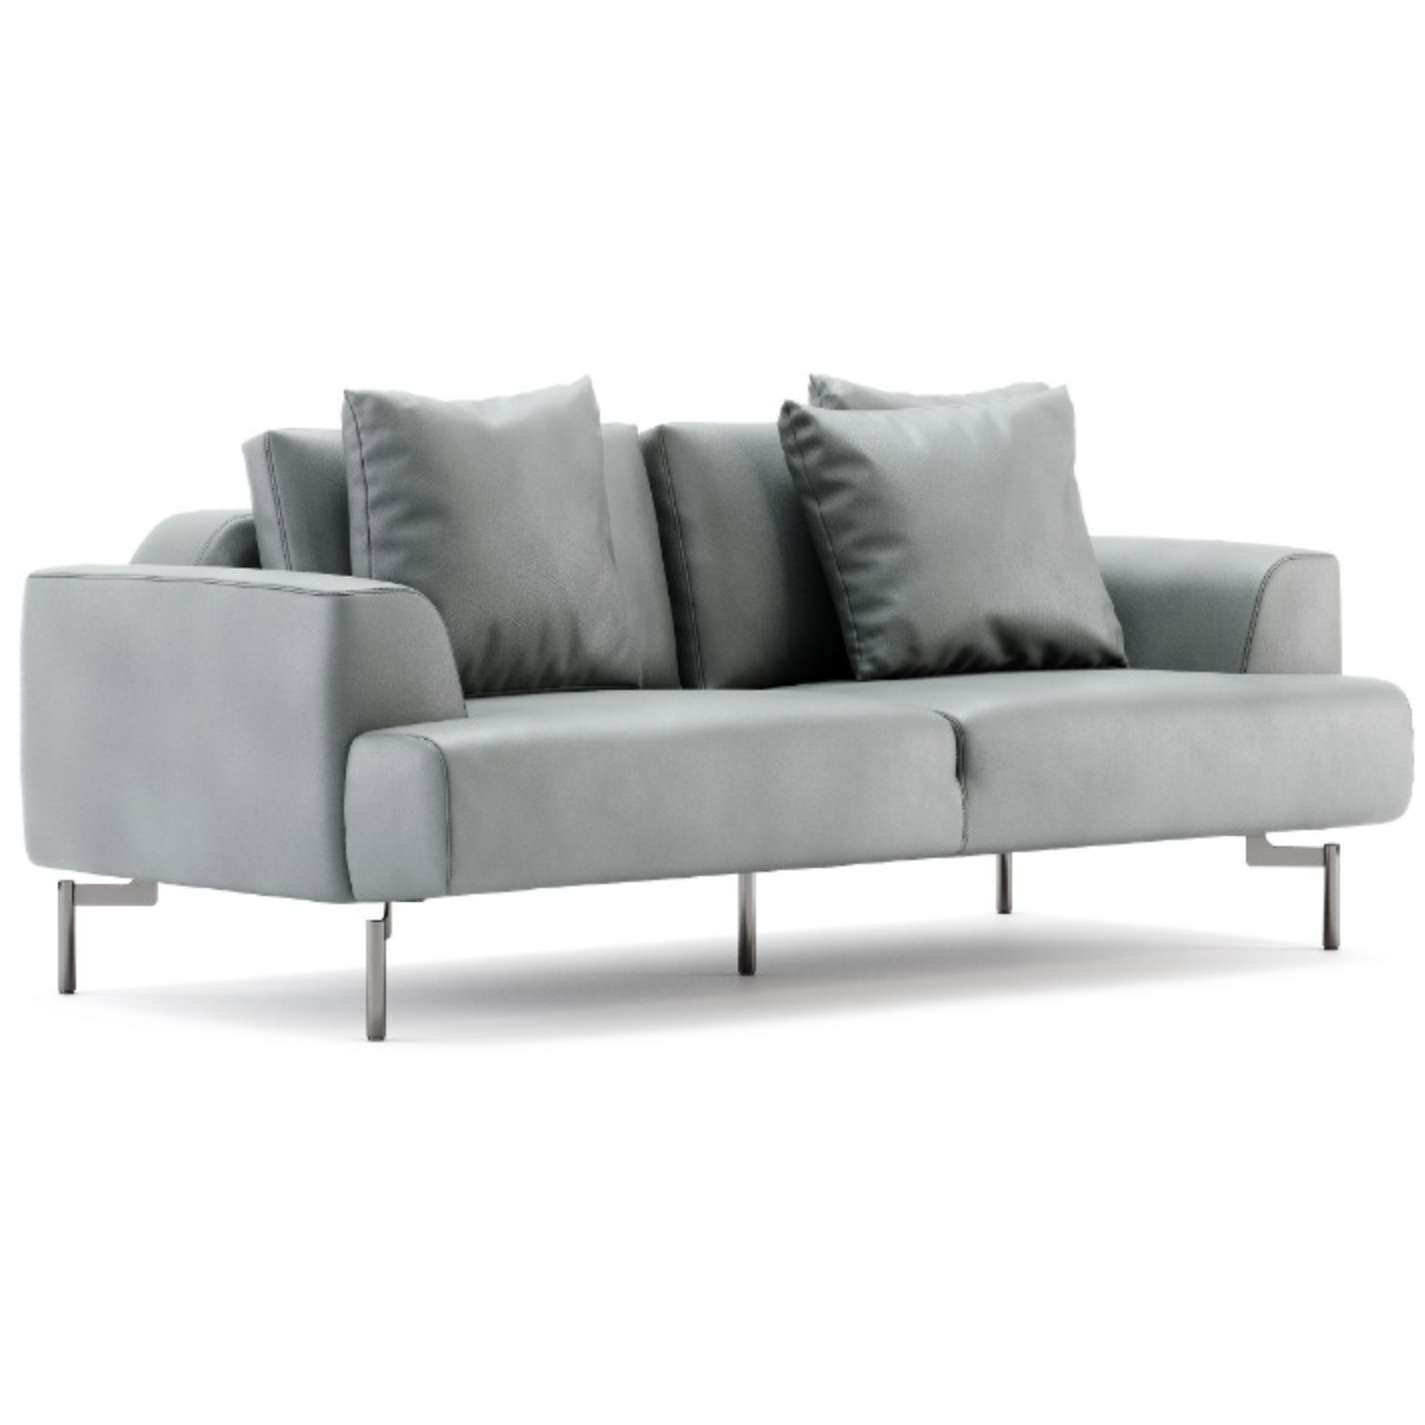 Domkapa Taís 2-Seater Sofa - Customisable | Modern Furniture + Decor